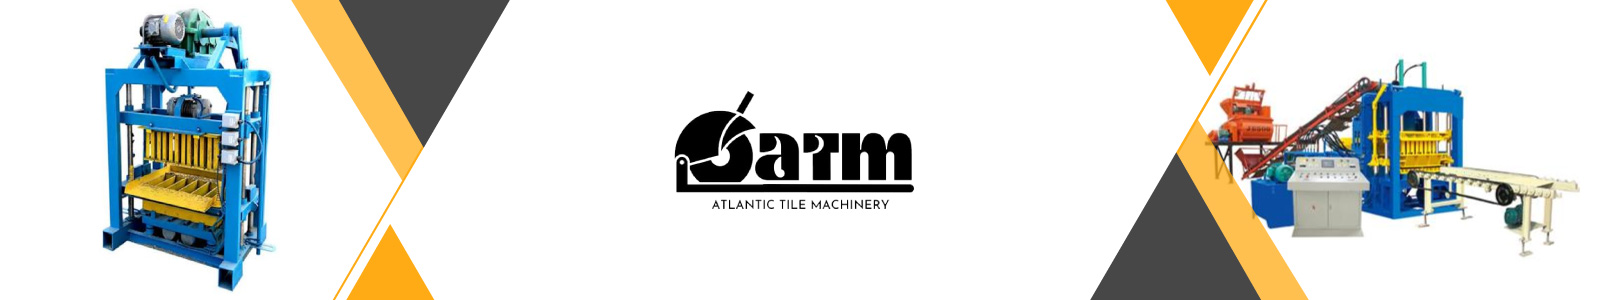 Atlantic Tile Machinery